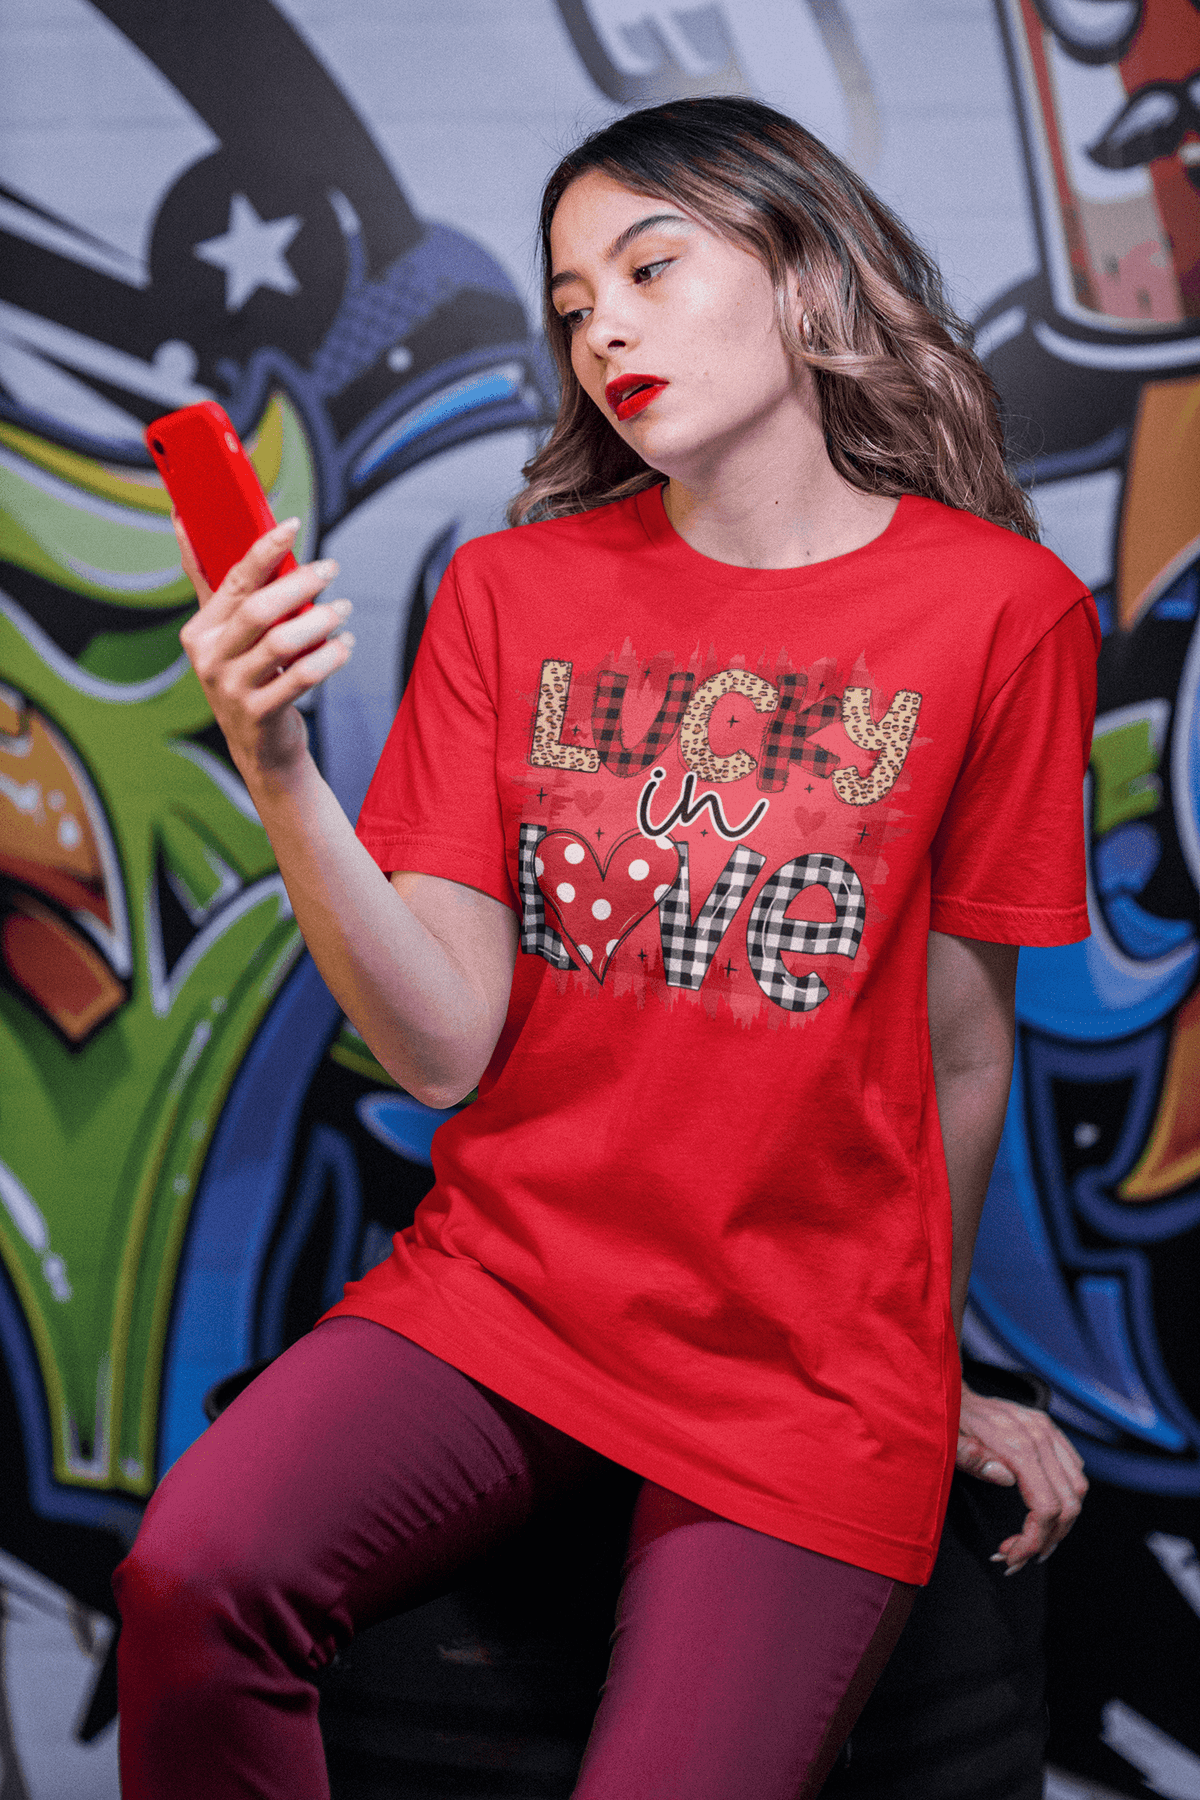 LUCKY IN LOVE T-shirt - StylinArt